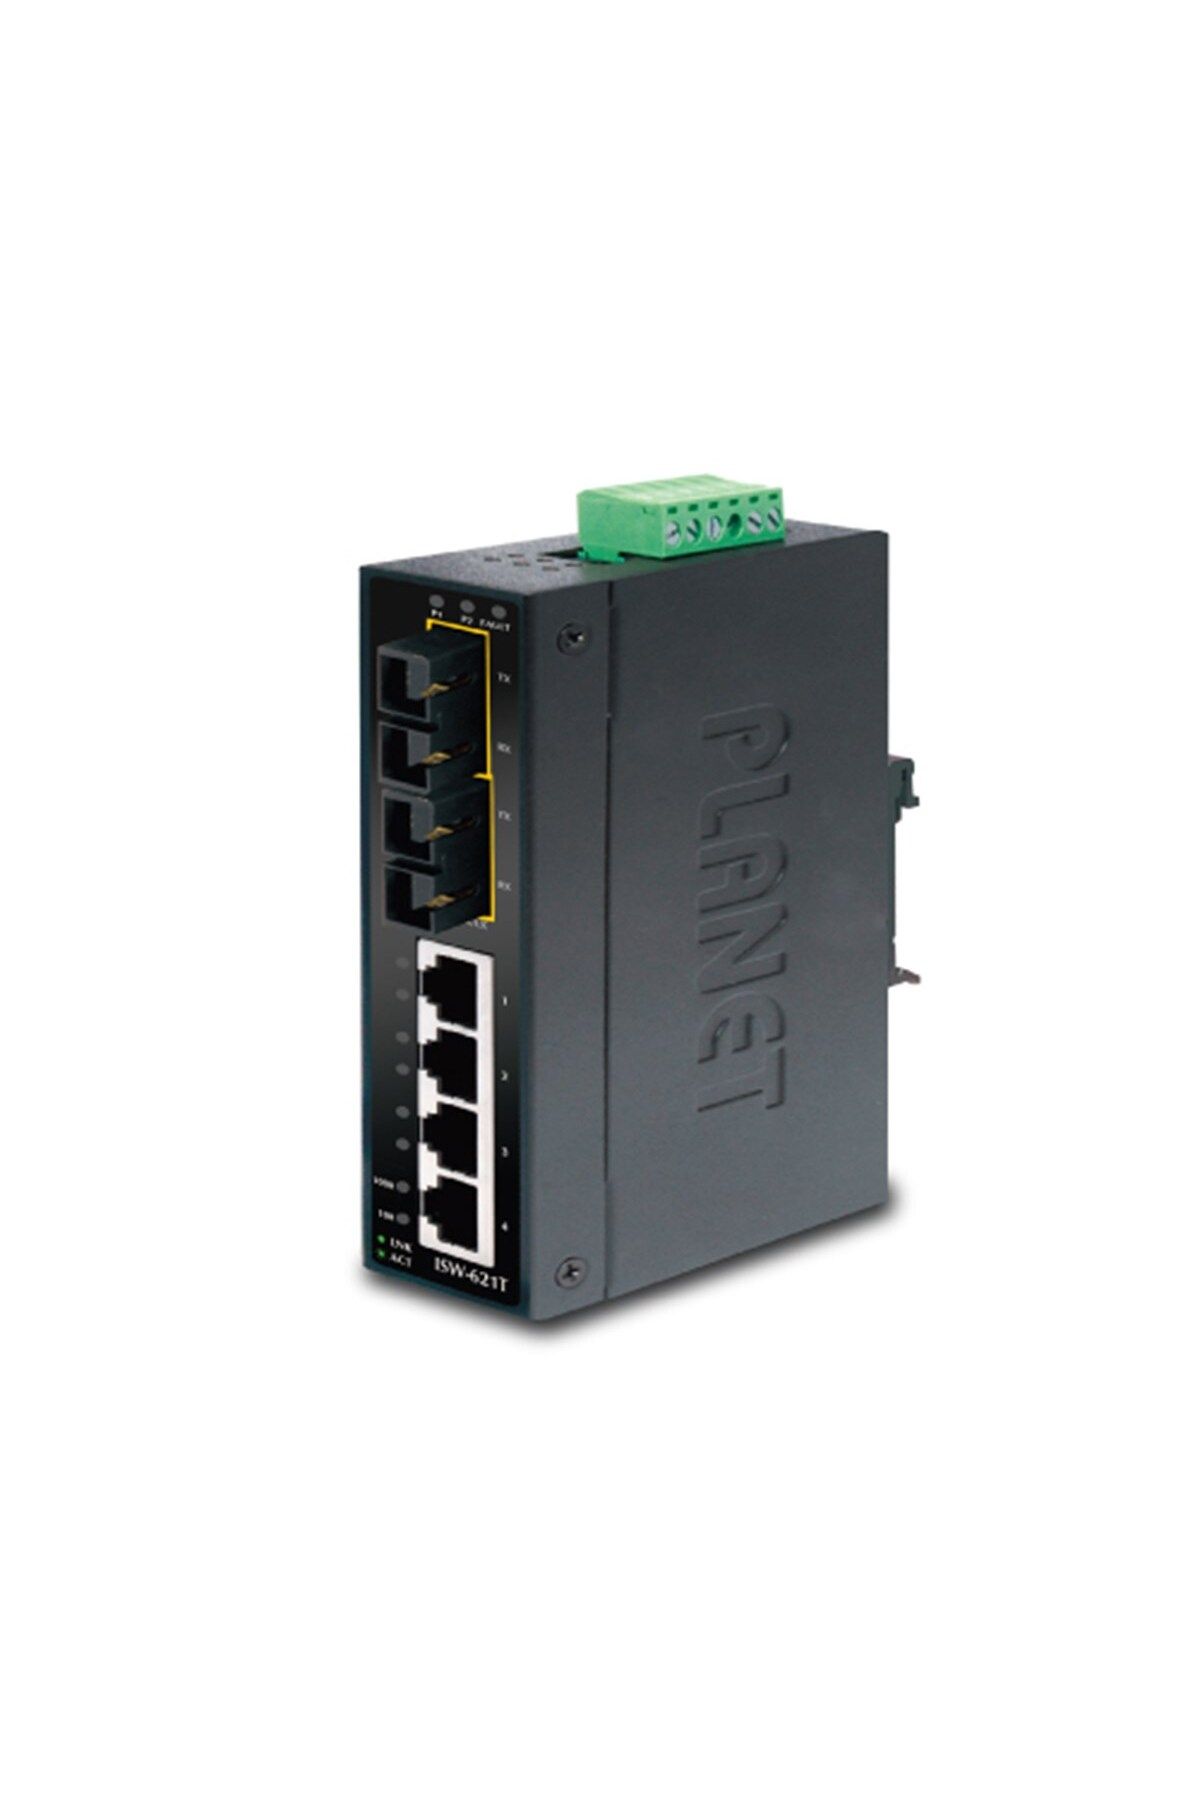 Planet Endüstriyel Tip Yönetilemeyen Ethernet Switch (INDUSTRİAL UNMANAGED ETHERNET SWİTCH)
4-port 10/100ba